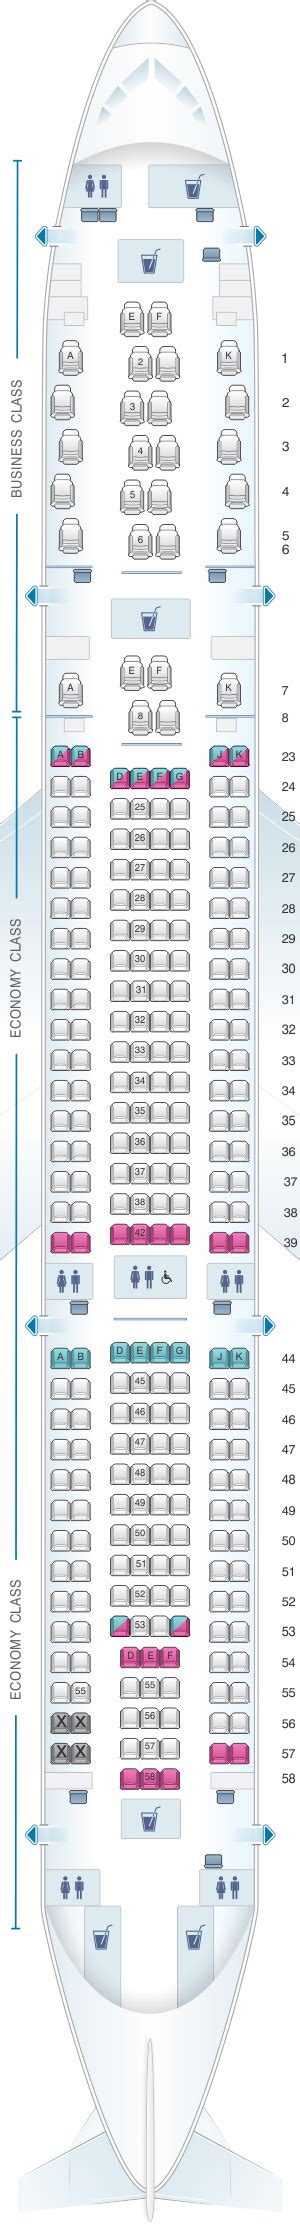 A330 Seat Map Qantas